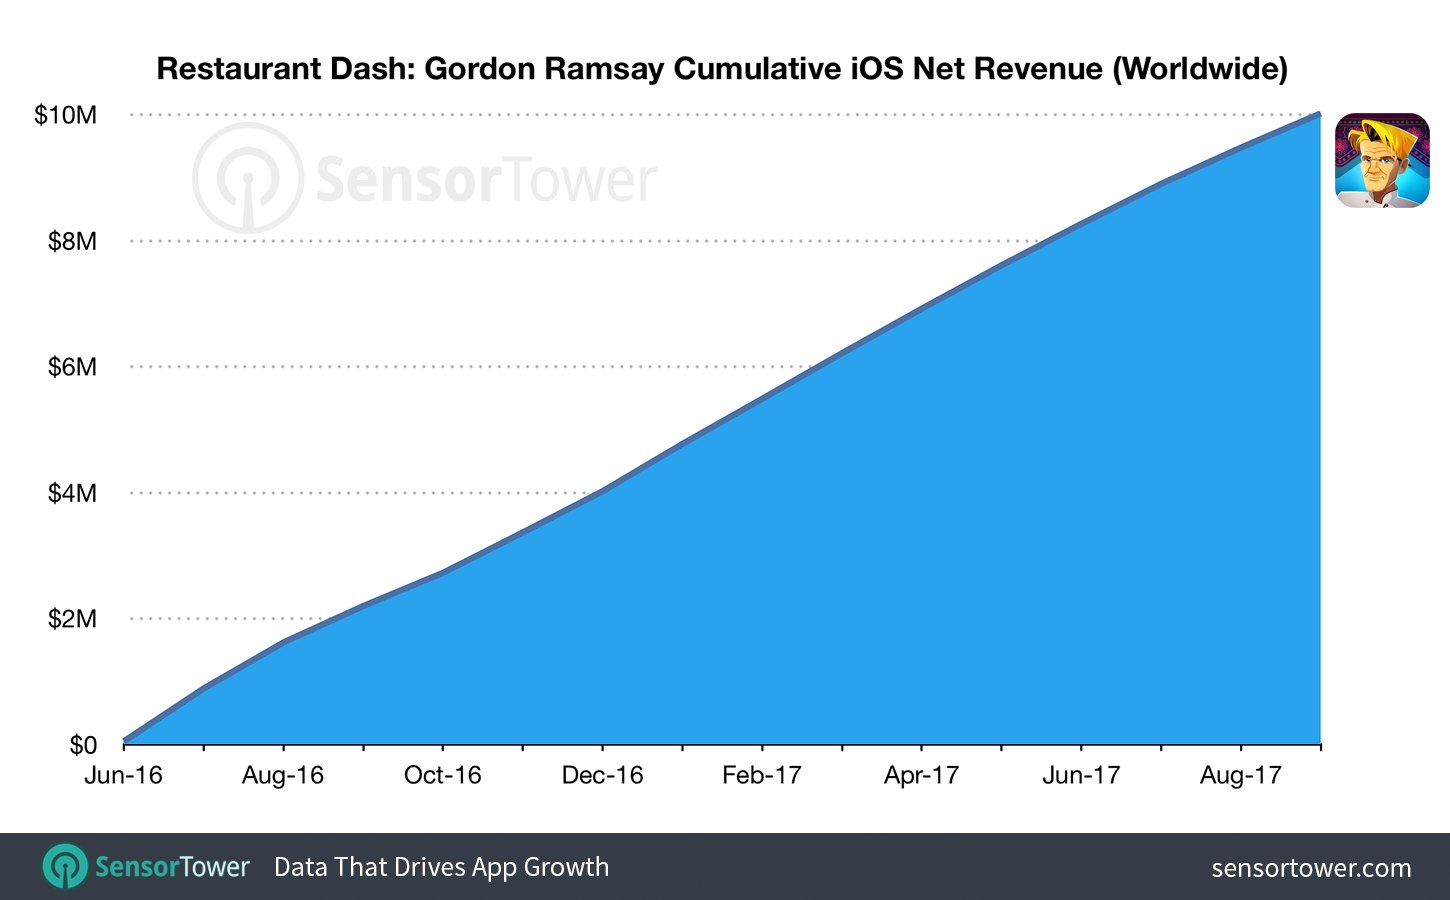 Chart showing cumulative worldwide lifetime iOS net revenue for Restaurant Dash Gordon Ramsay